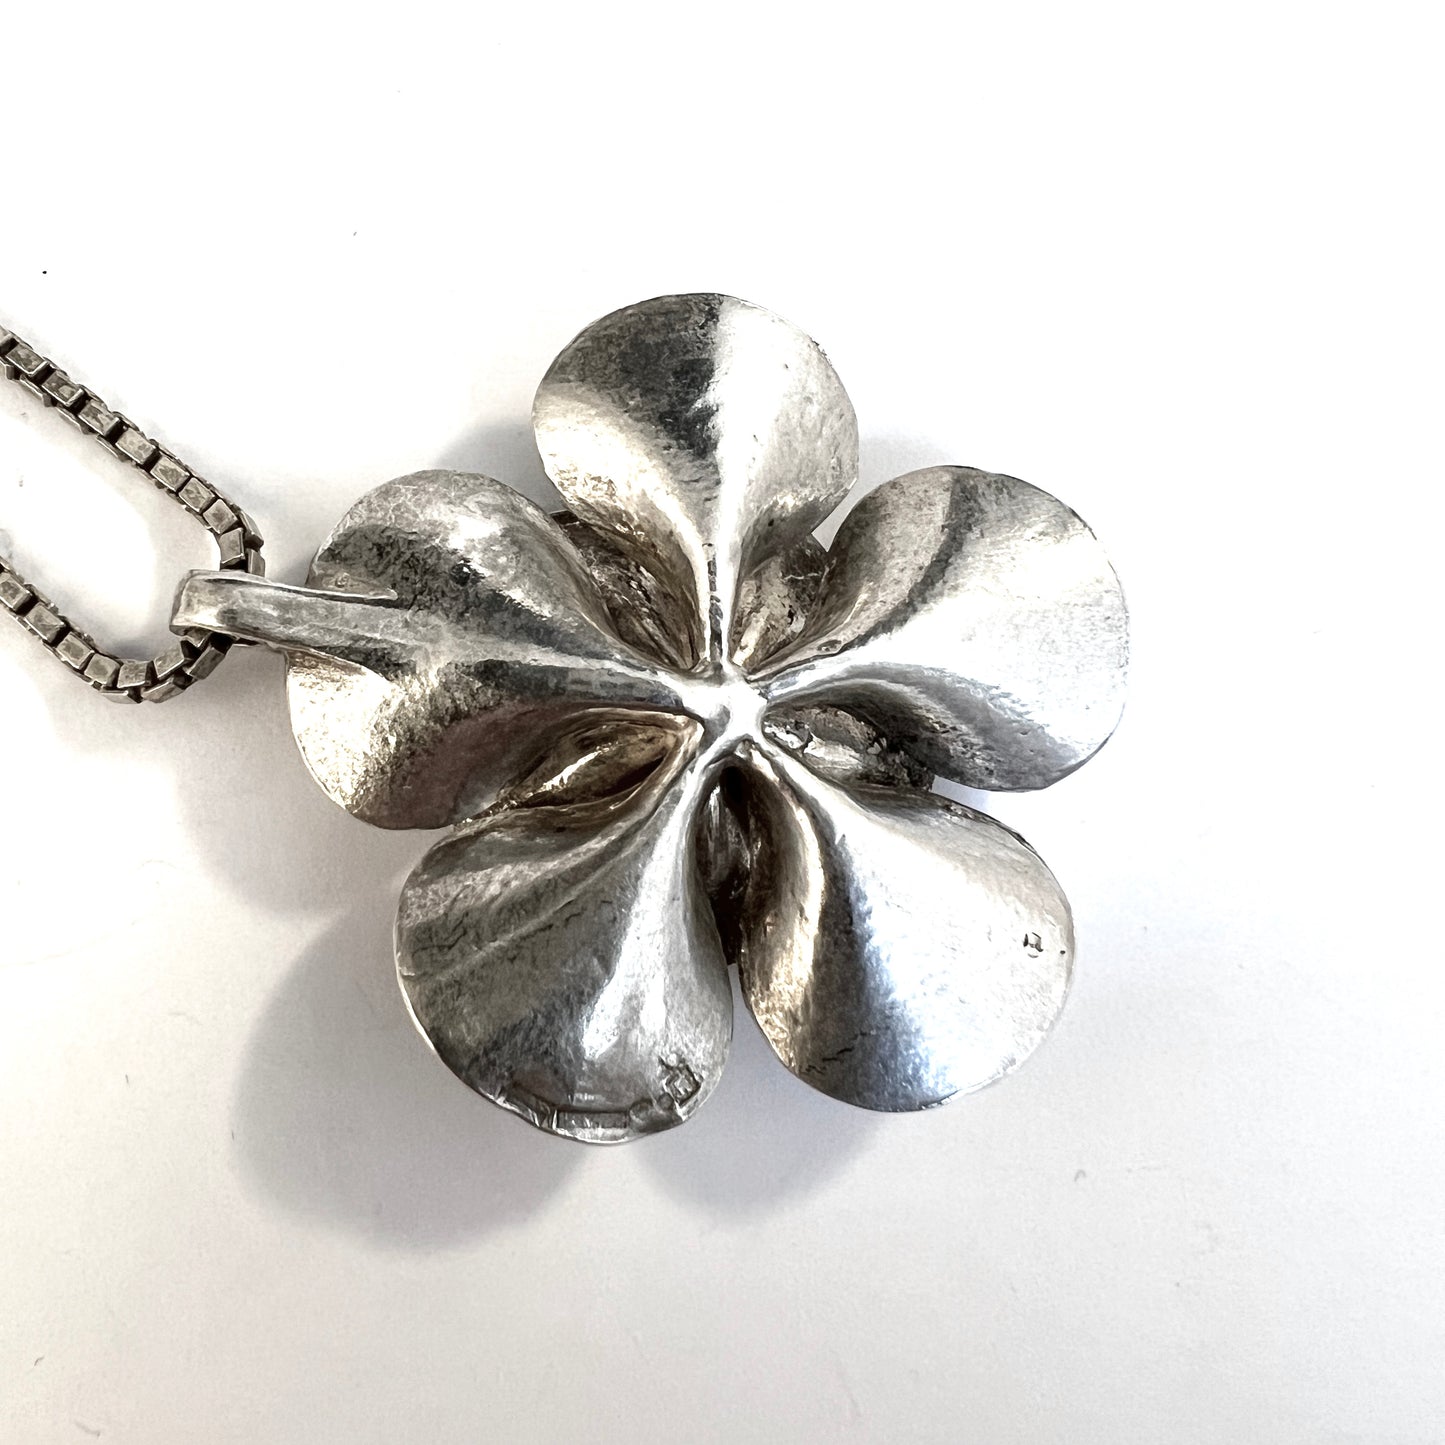 Sweden 1970s. Solid Silver Hippie Flower Power Pendant Long Chain Necklace.